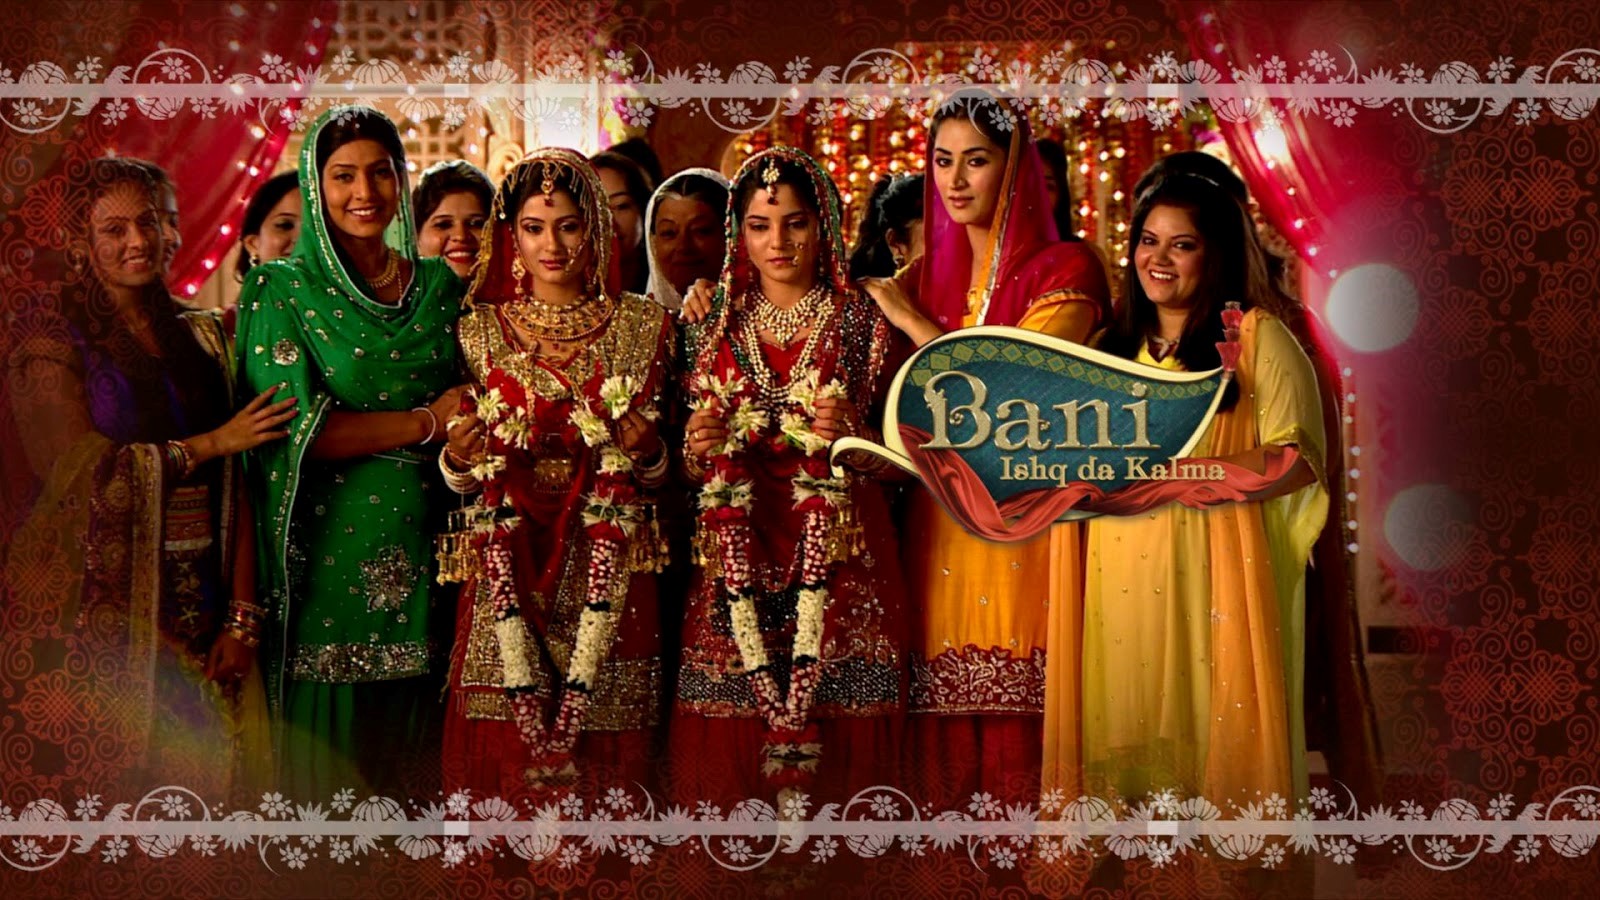 Bani Ishq Da Kalma Indian Tv Serial Cast Wallpaper - Bani Ishq Da Kalma Serial - HD Wallpaper 